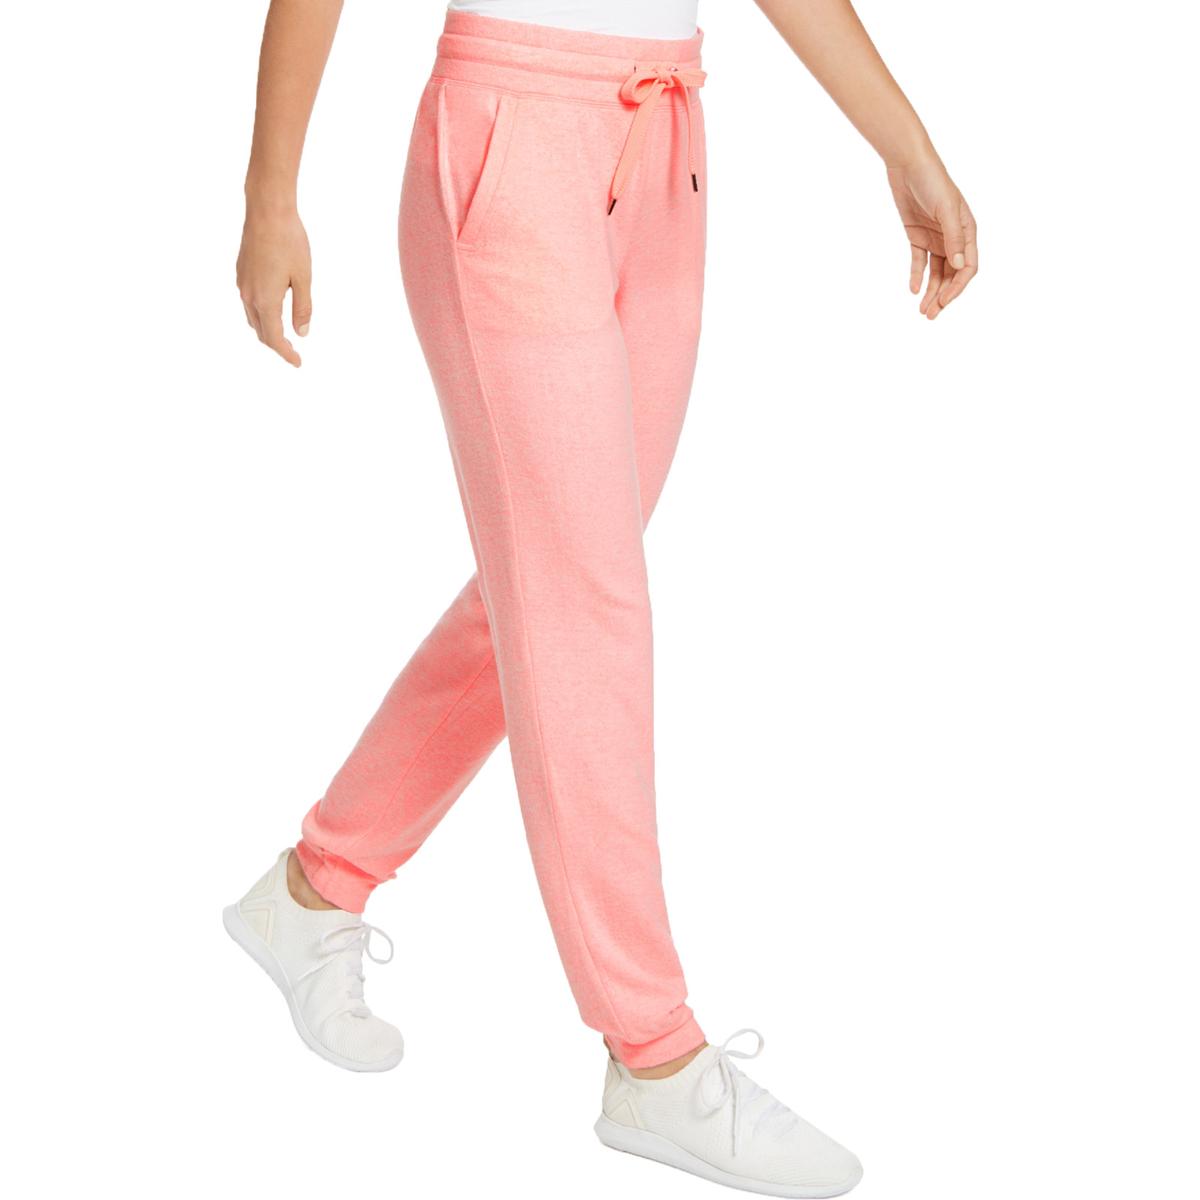 Ideology Womens Pink Sweatpants Fitness Jogger Pants Loungewear L BHFO ...